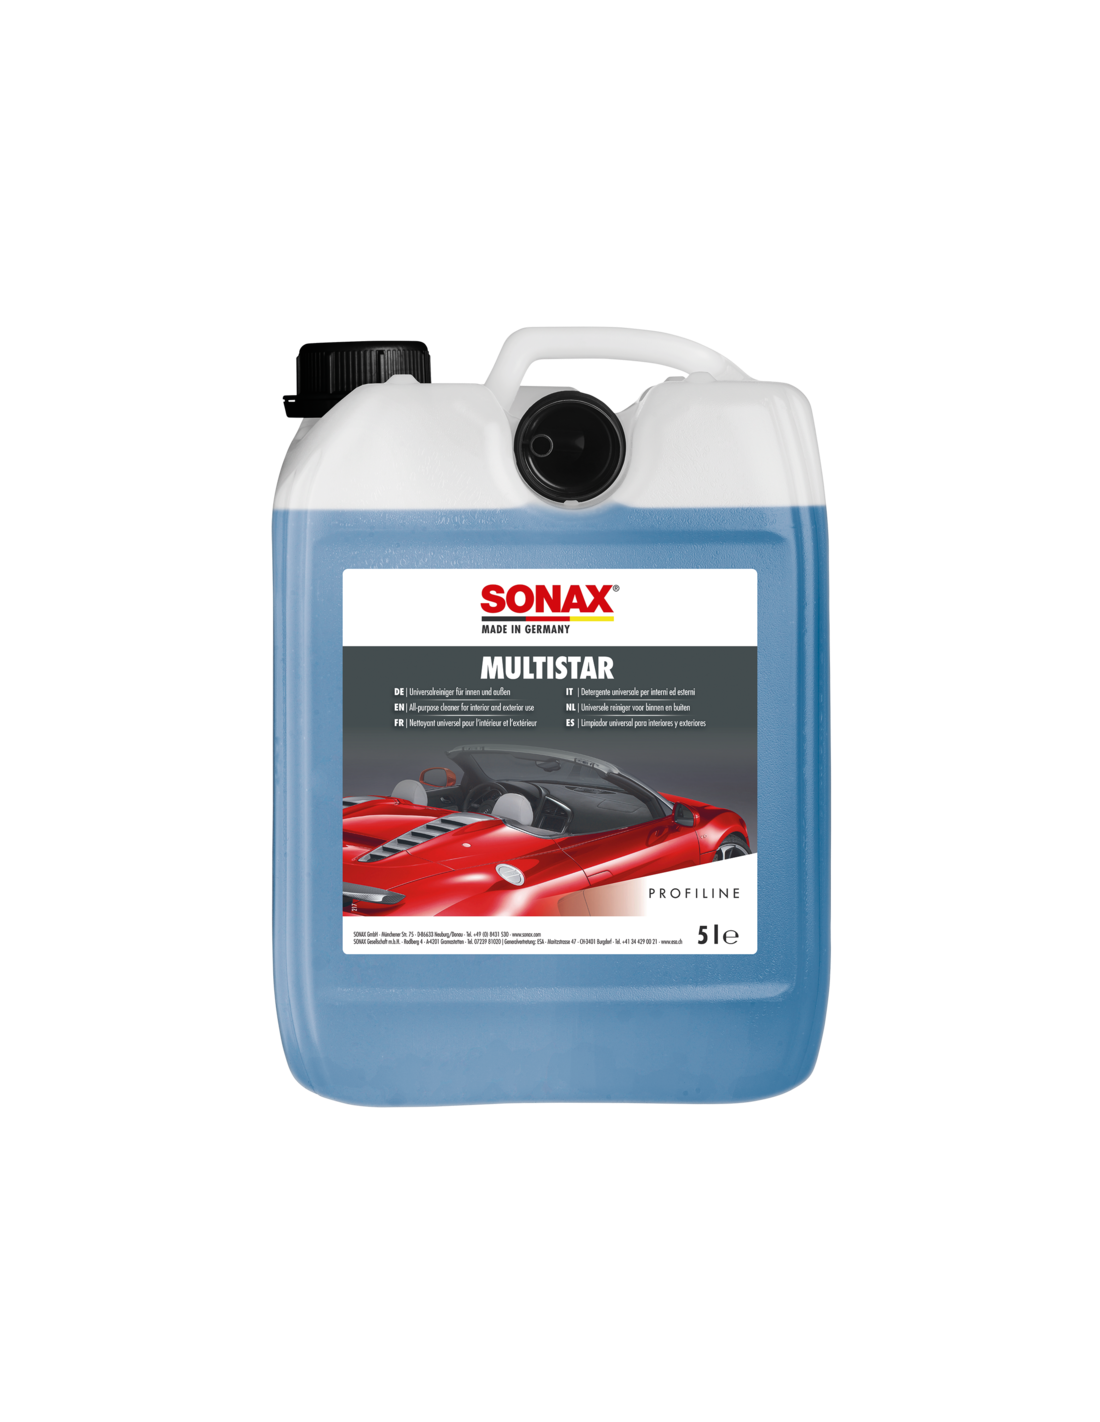 Sonax - MultiStar Universal Cleaner